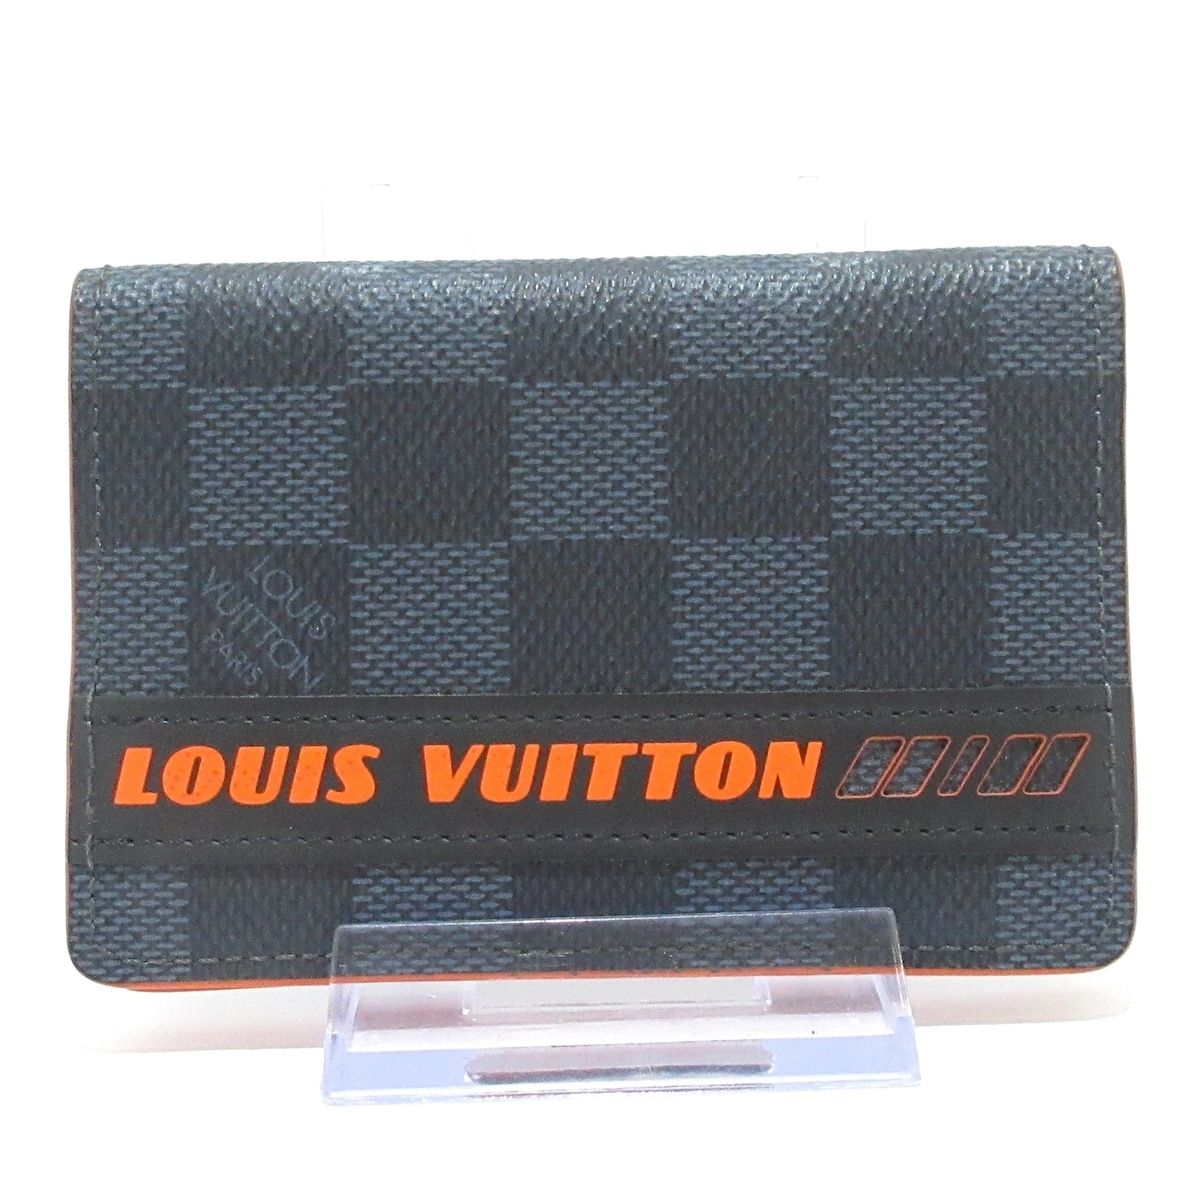 LOUIS VUITTON(ルイヴィトン) カードケース ダミエ・コバルトレース美 ...